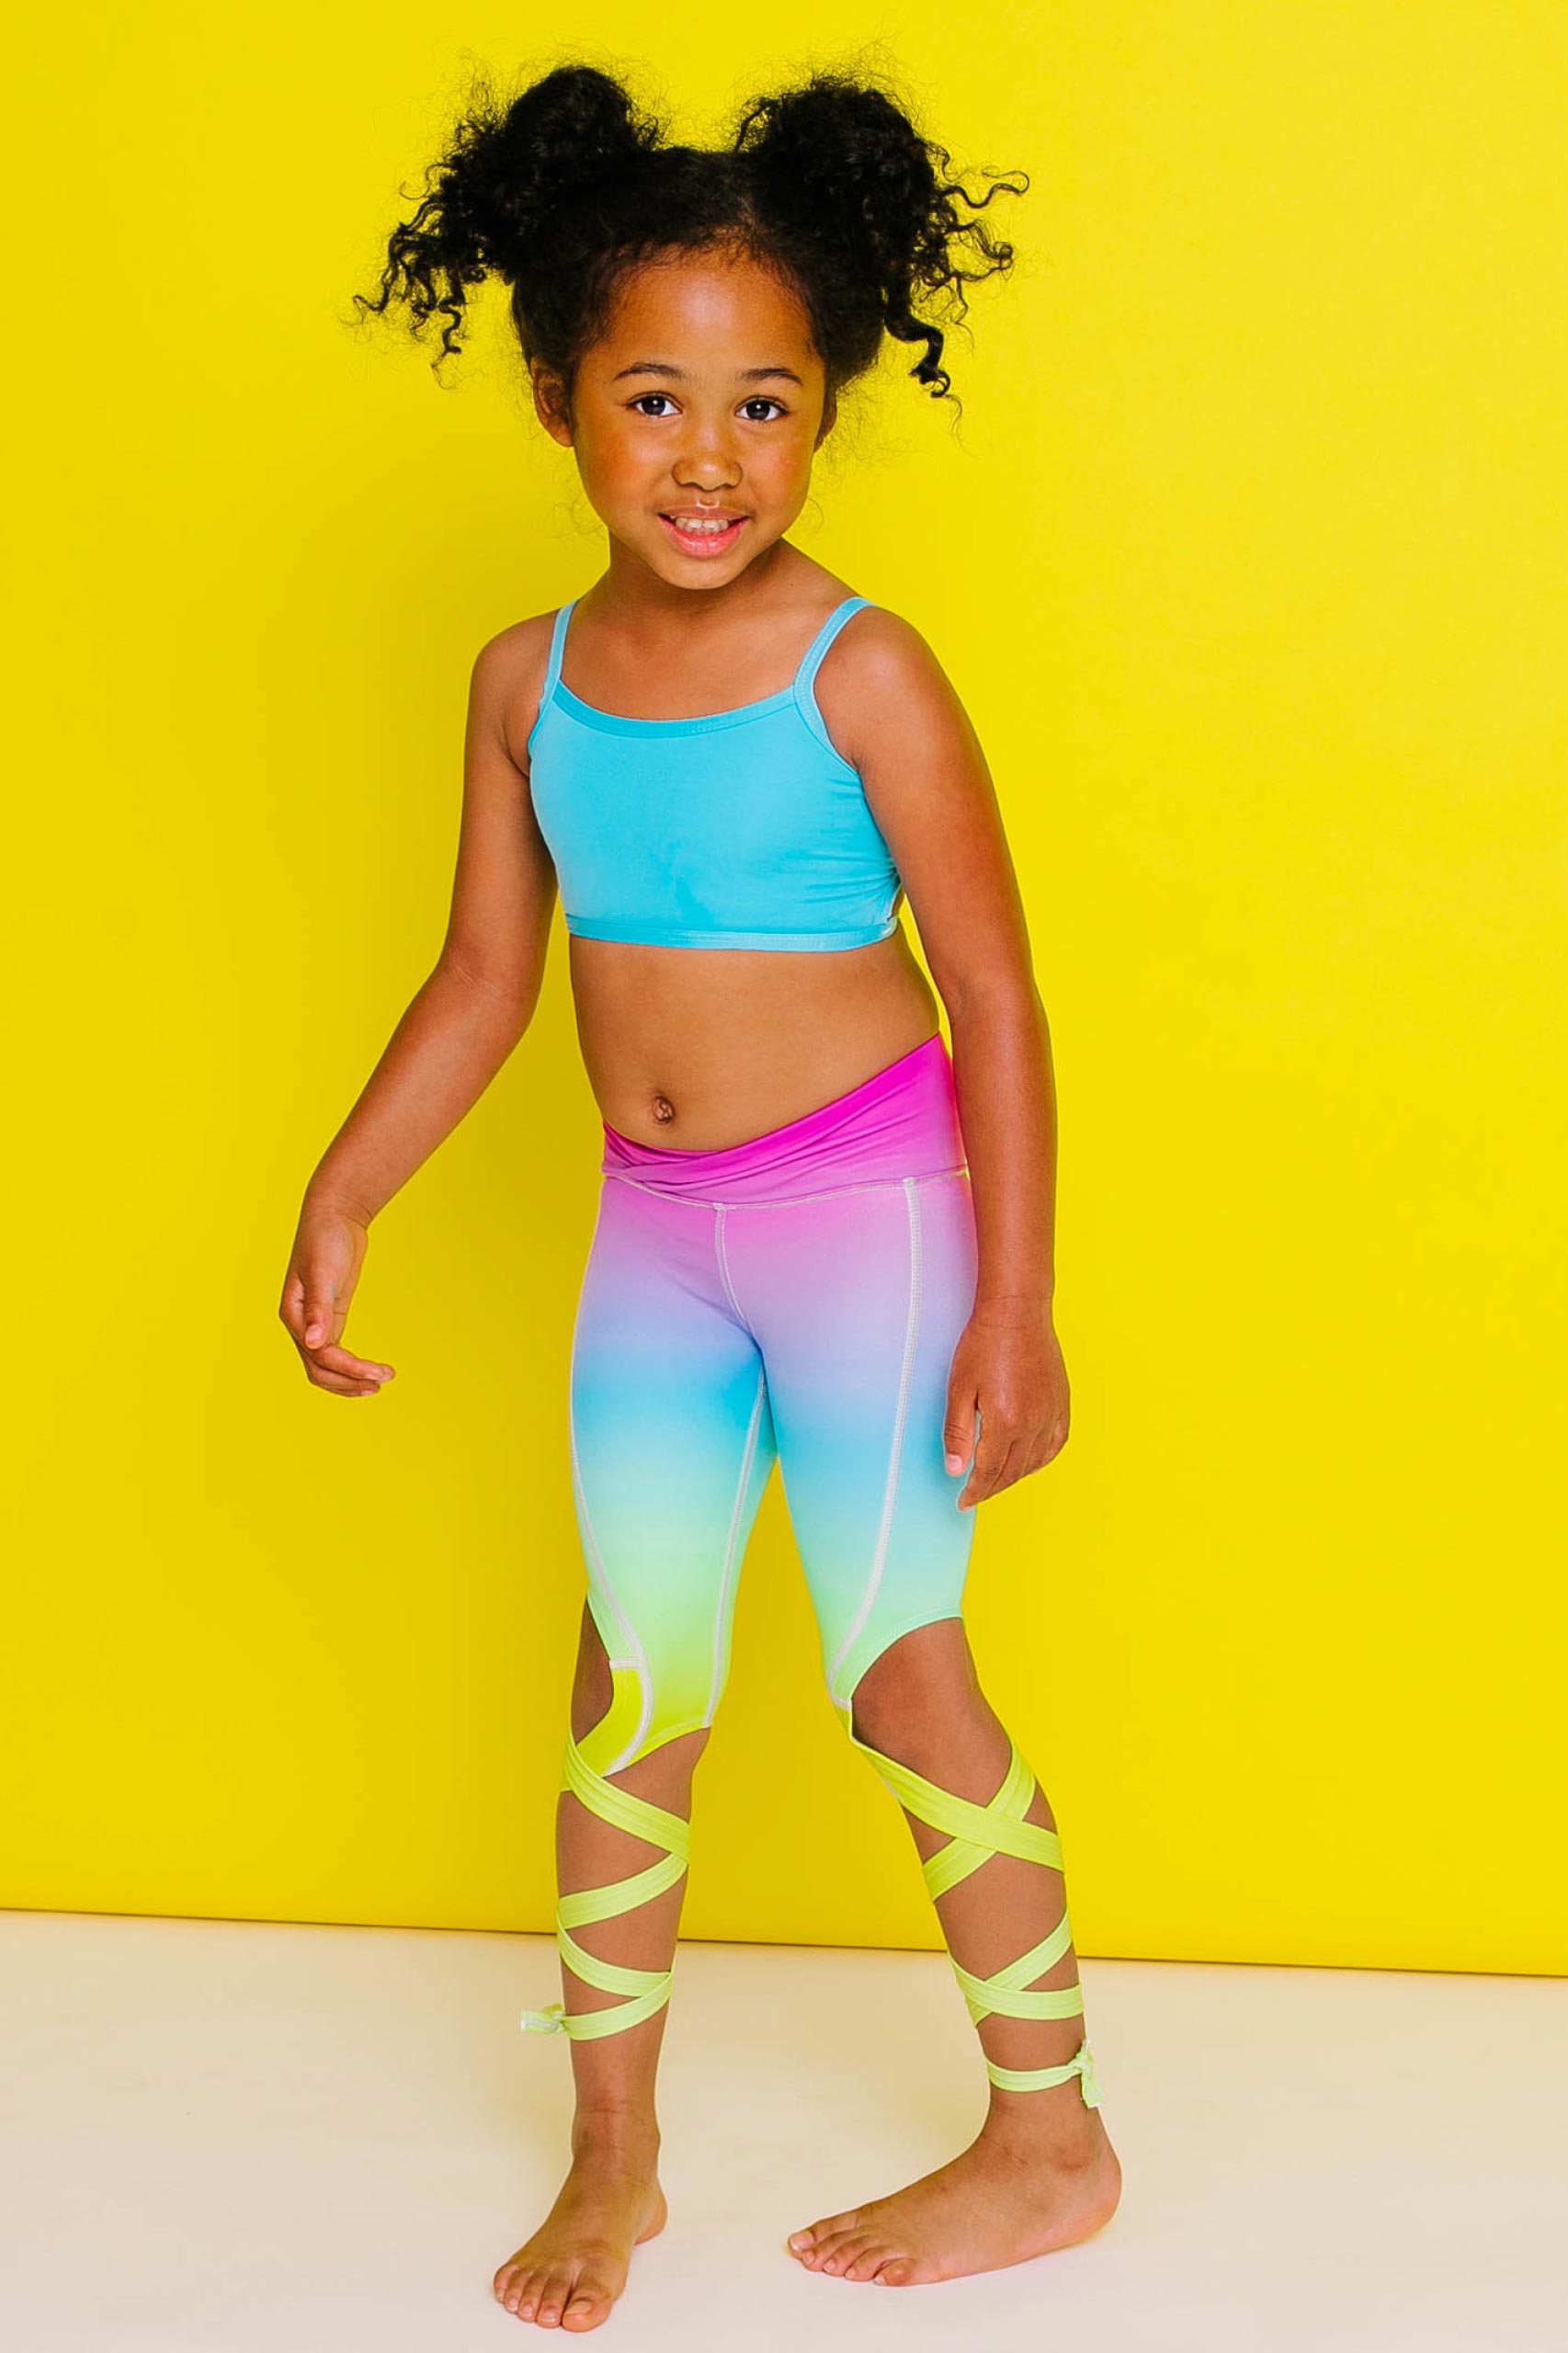 Rainbow Flexi Dancer Leggings Kids and Minis – Flexi Lexi Fitness